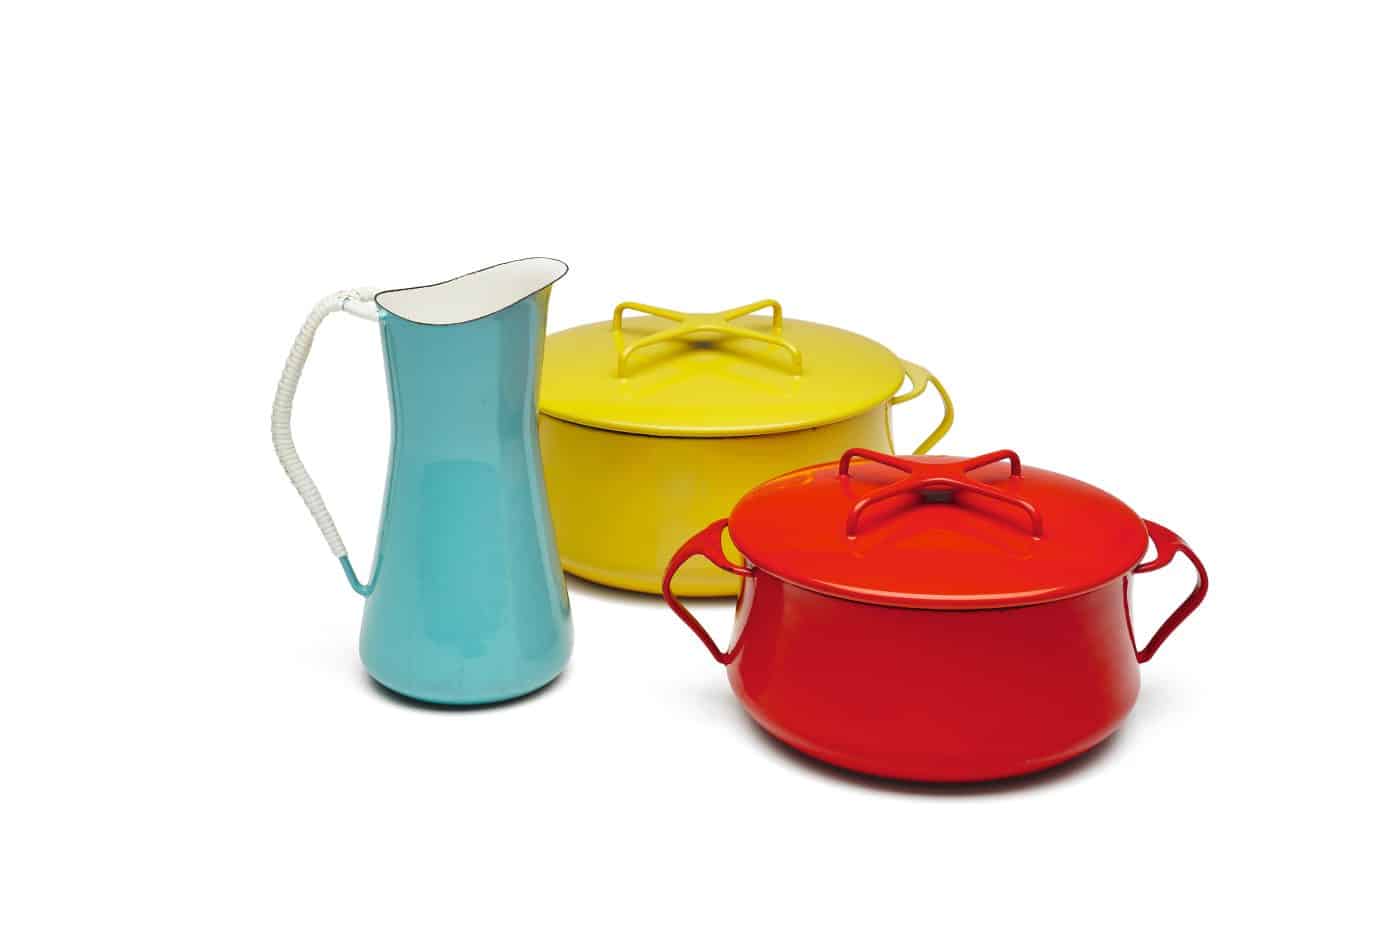 A Dansk Købenstyle light-blue pitcher, red casserole dish and yellow casserole dish, designed by Danish sculptor Jens H. Quistgaard